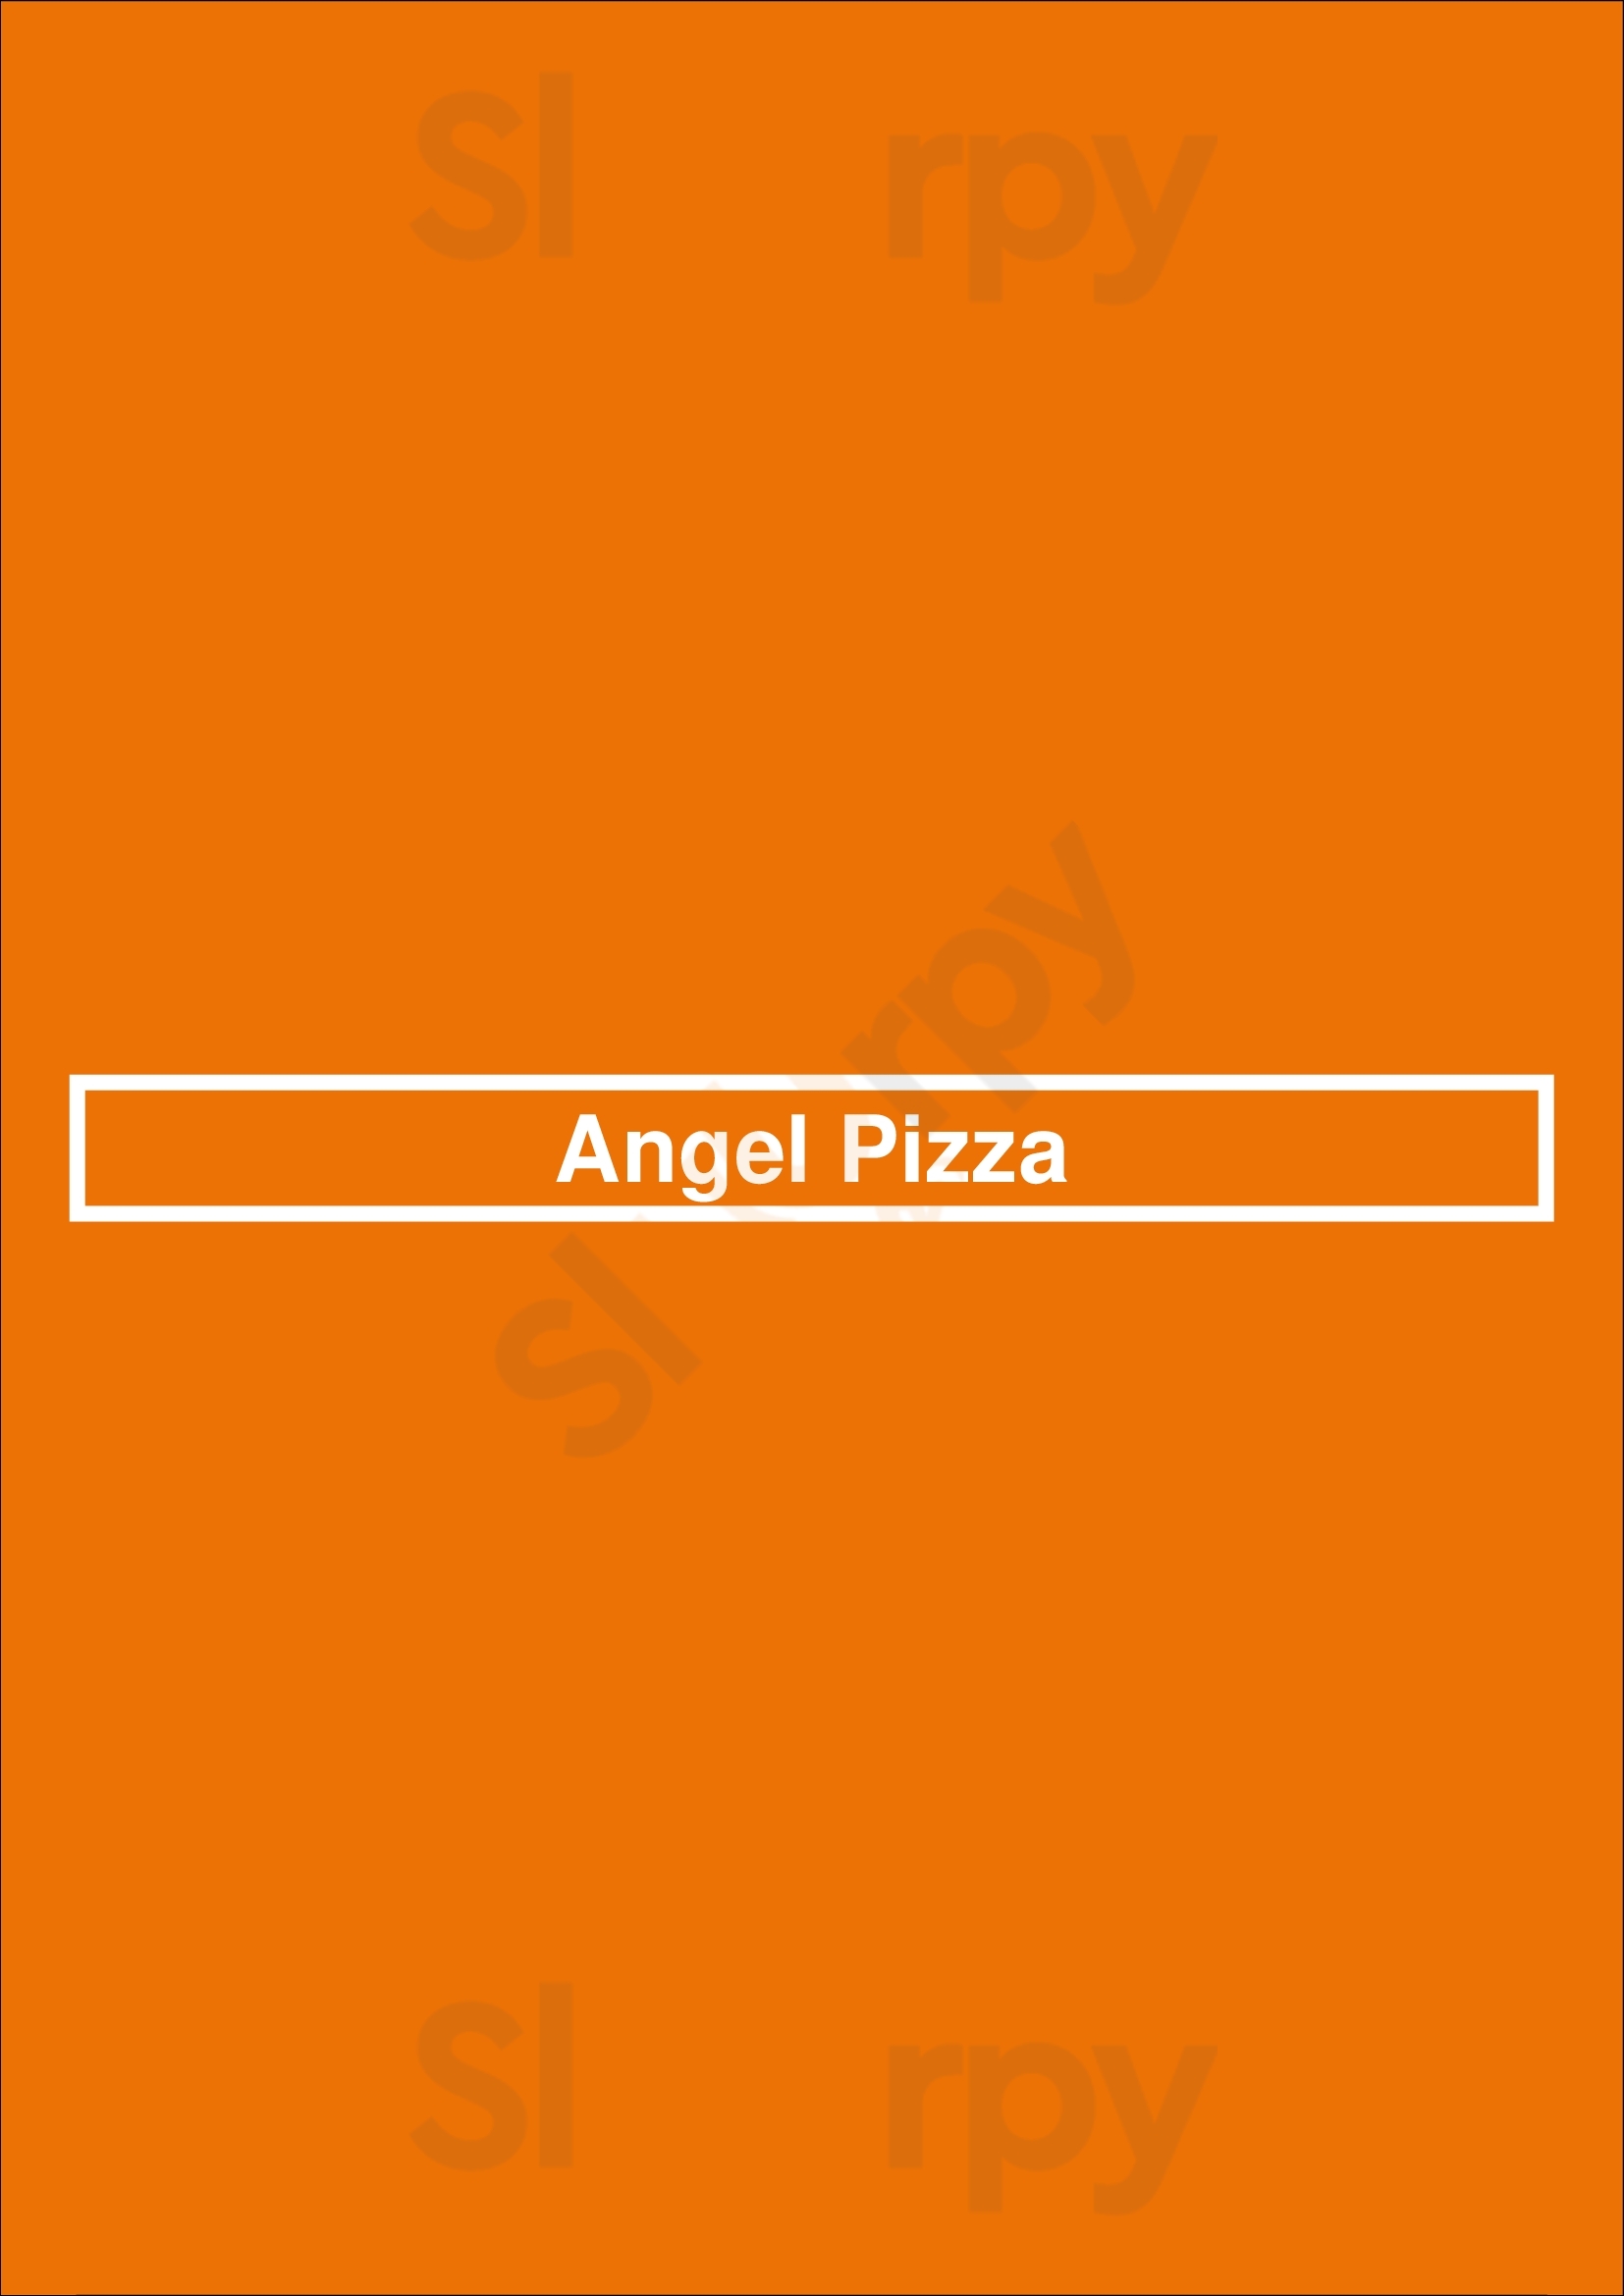 Angel Pizza Gateshead Menu - 1